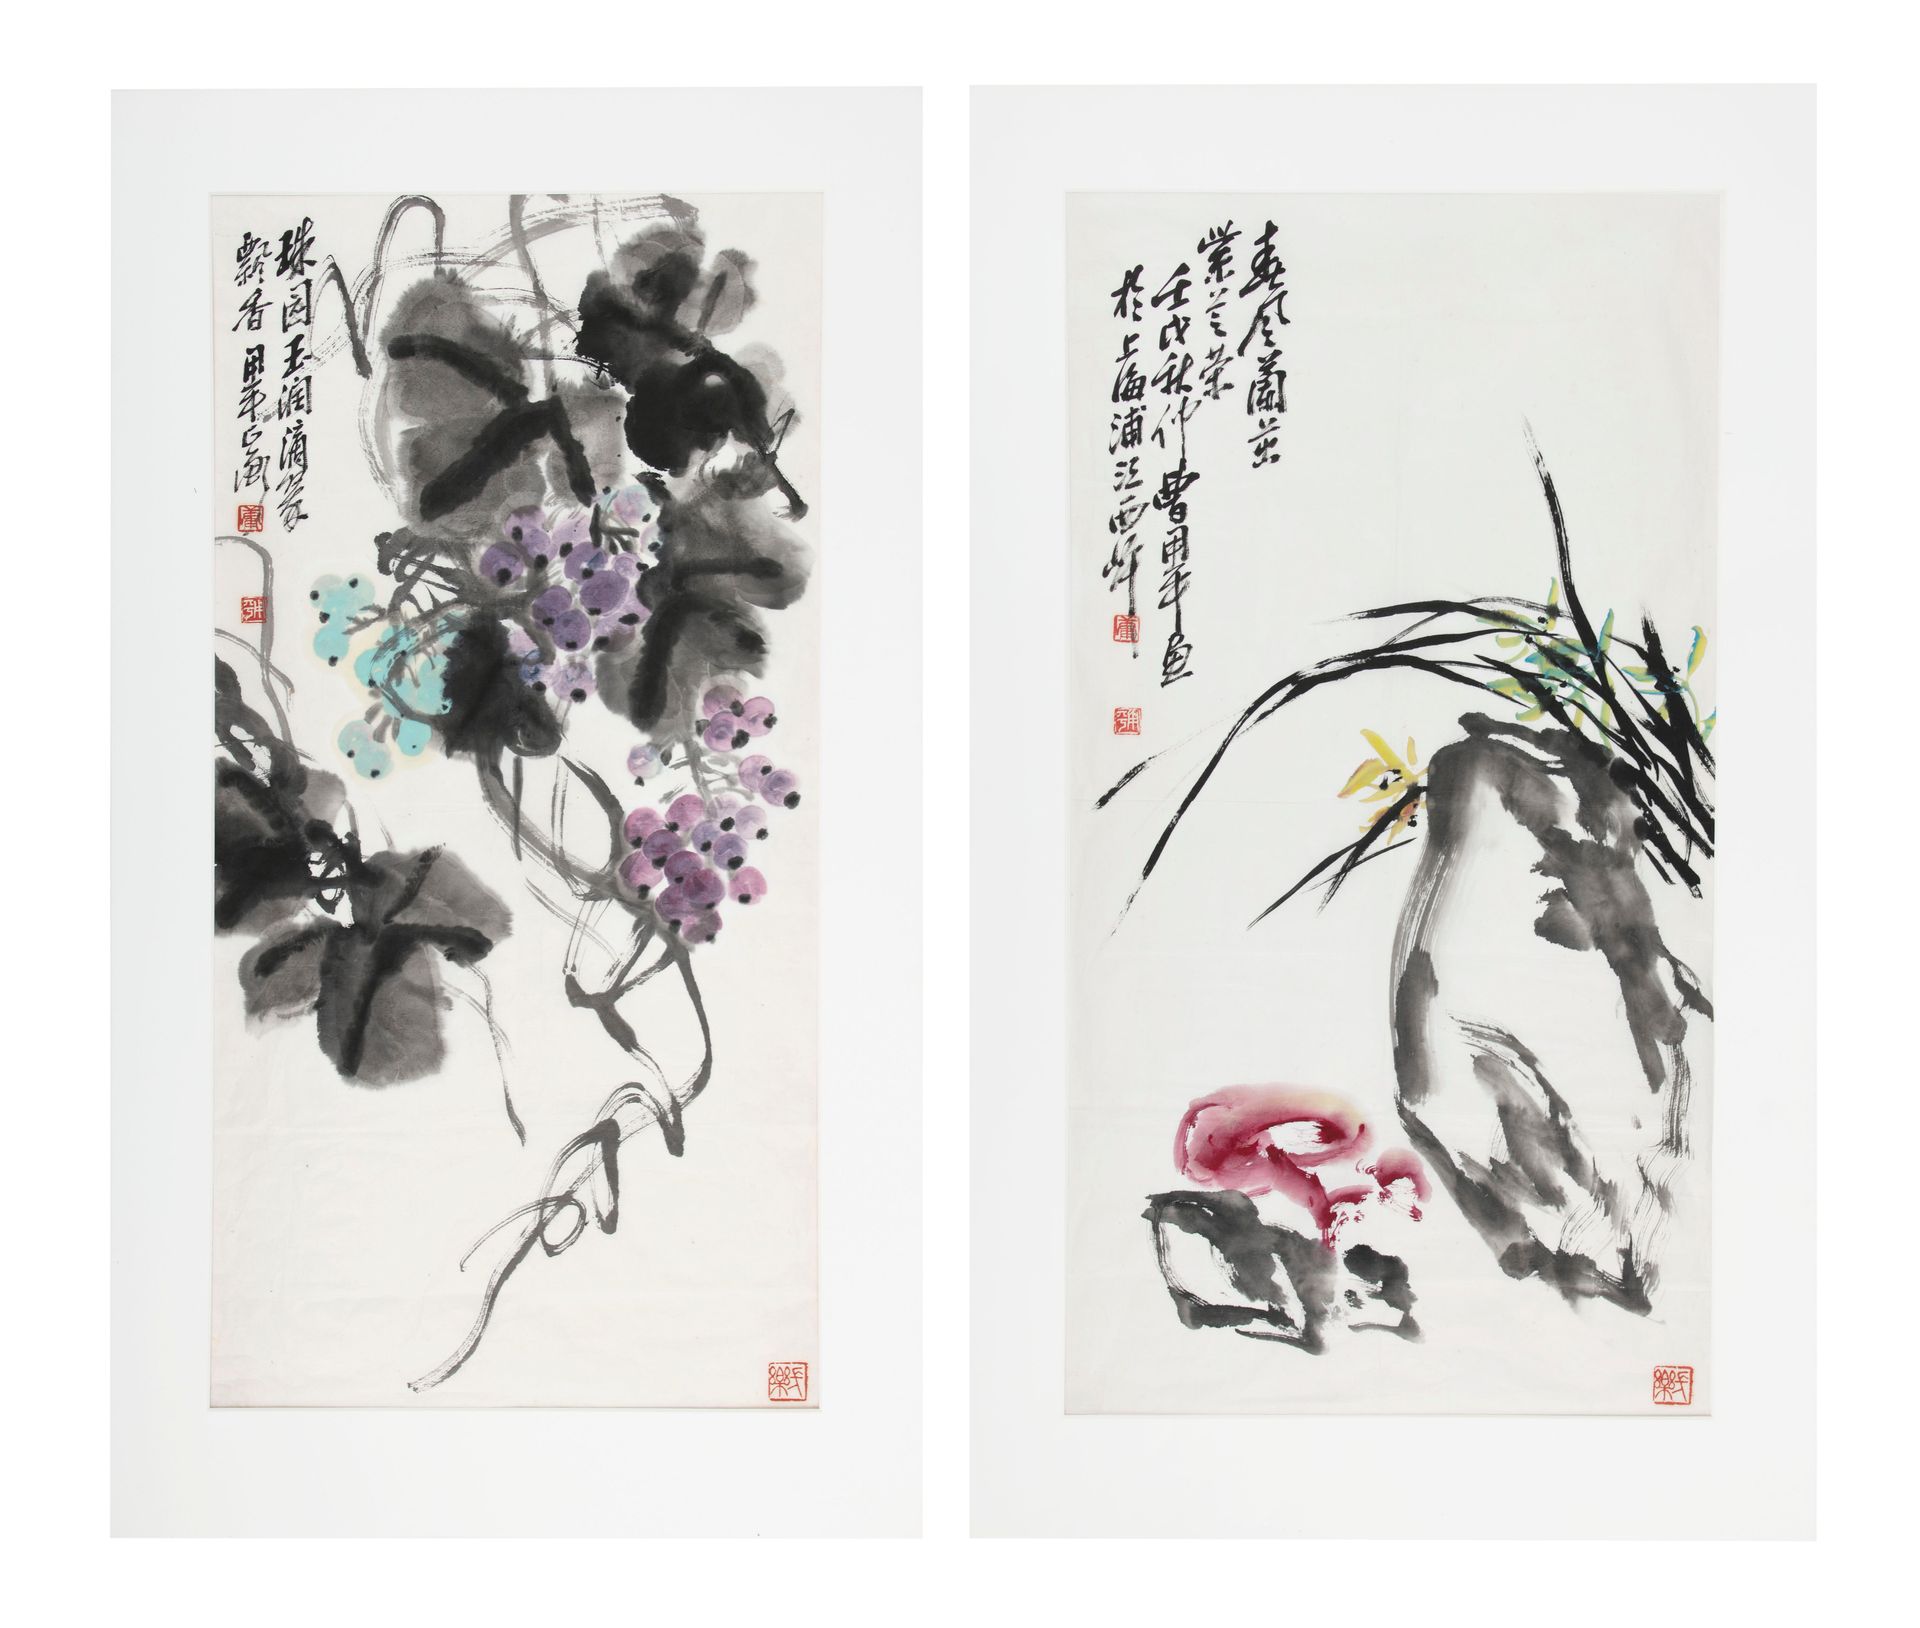 Null *曹用平 (1922-2018) 中国，20世纪 兰花和石头和花 一组2张纸上的水墨和彩色画 未装框 有2个艺术家的印章 一个有日期。1982年 尺寸&hellip;